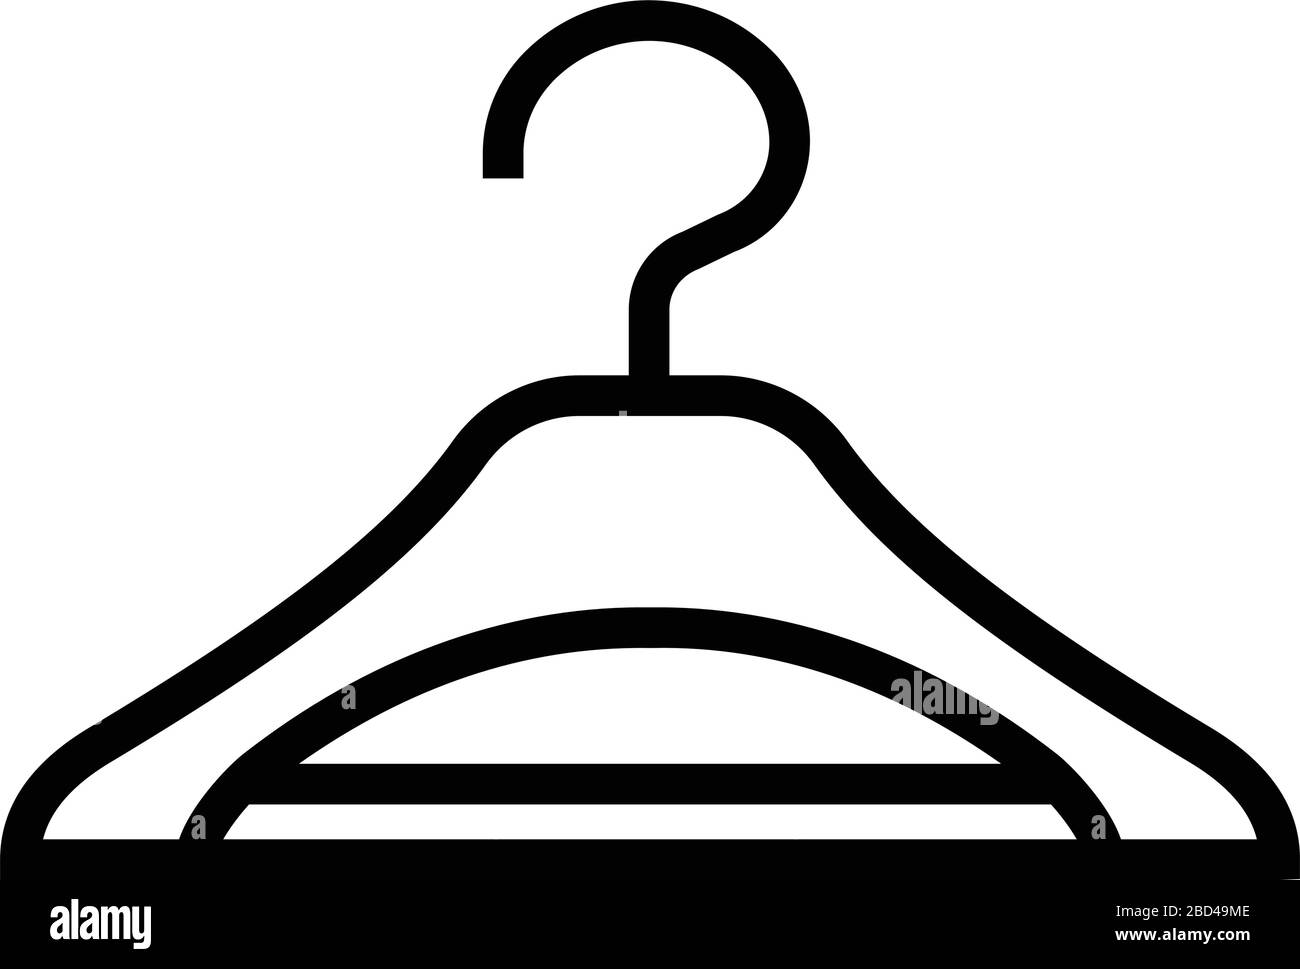 https://c8.alamy.com/comp/2BD49ME/thin-line-sharp-vector-icon-hanger-clothing-closet-cloak-2BD49ME.jpg